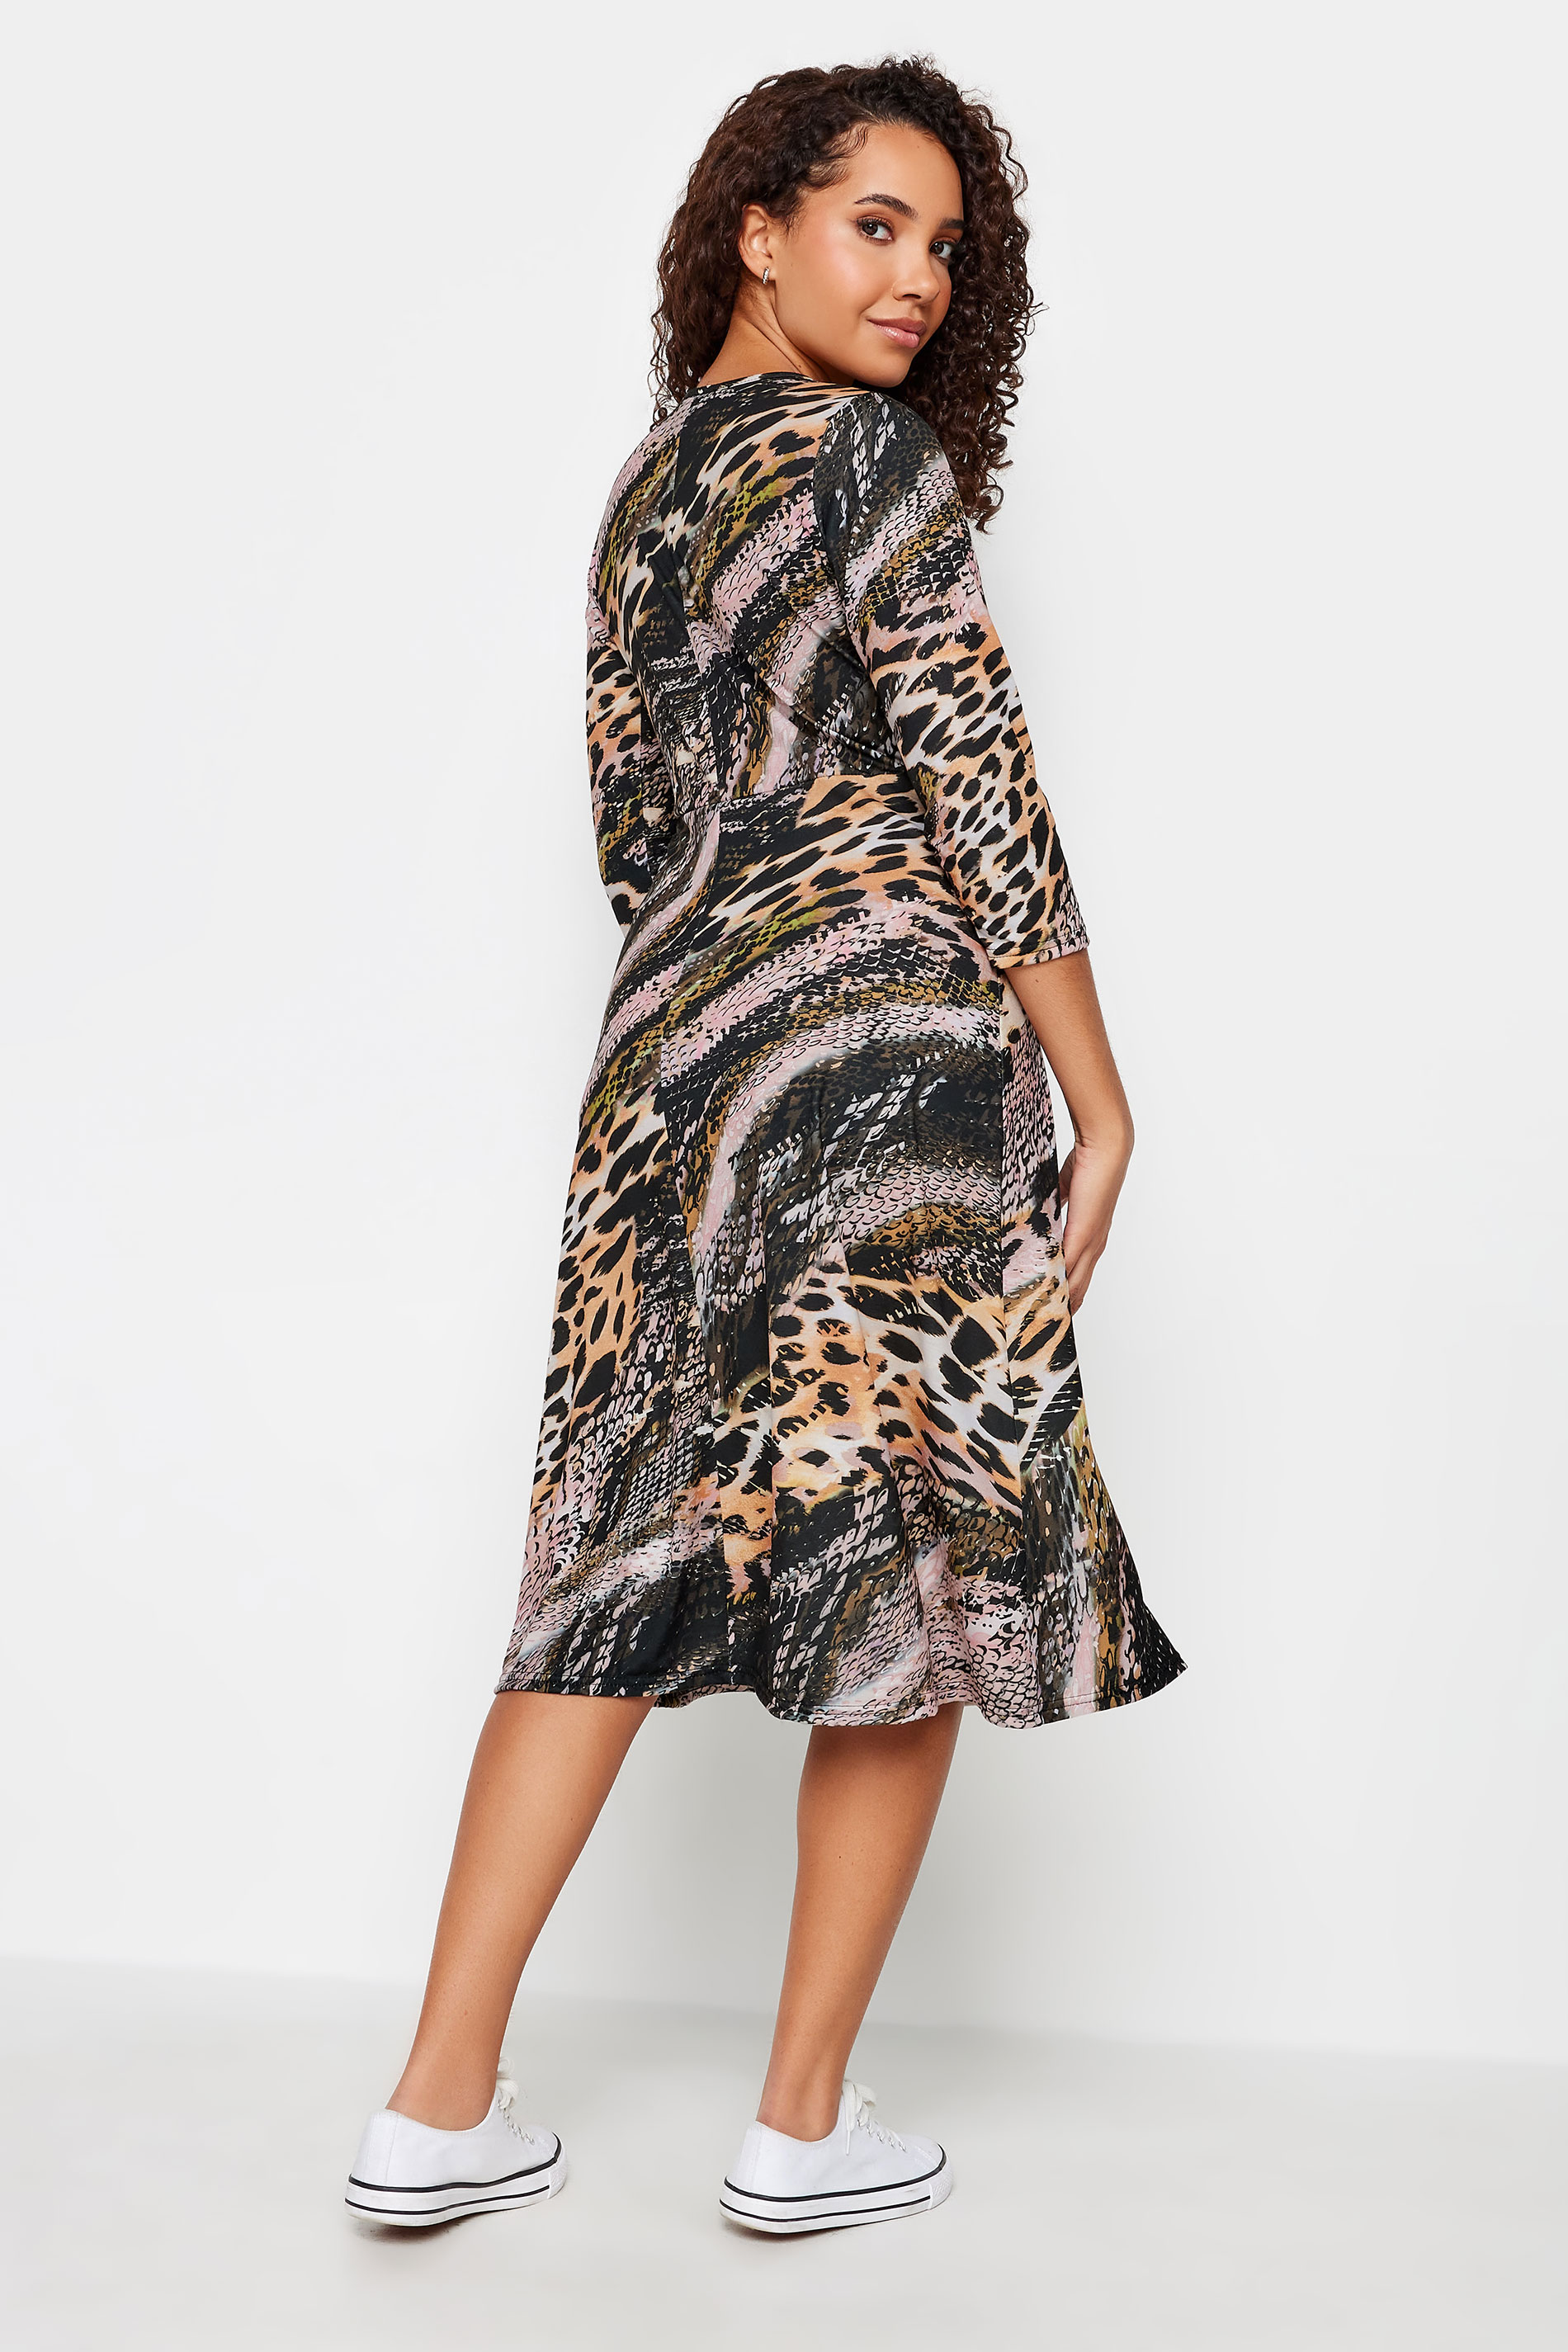 M&Co Brown Mixed Animal Print Midaxi Dress | M&Co 3